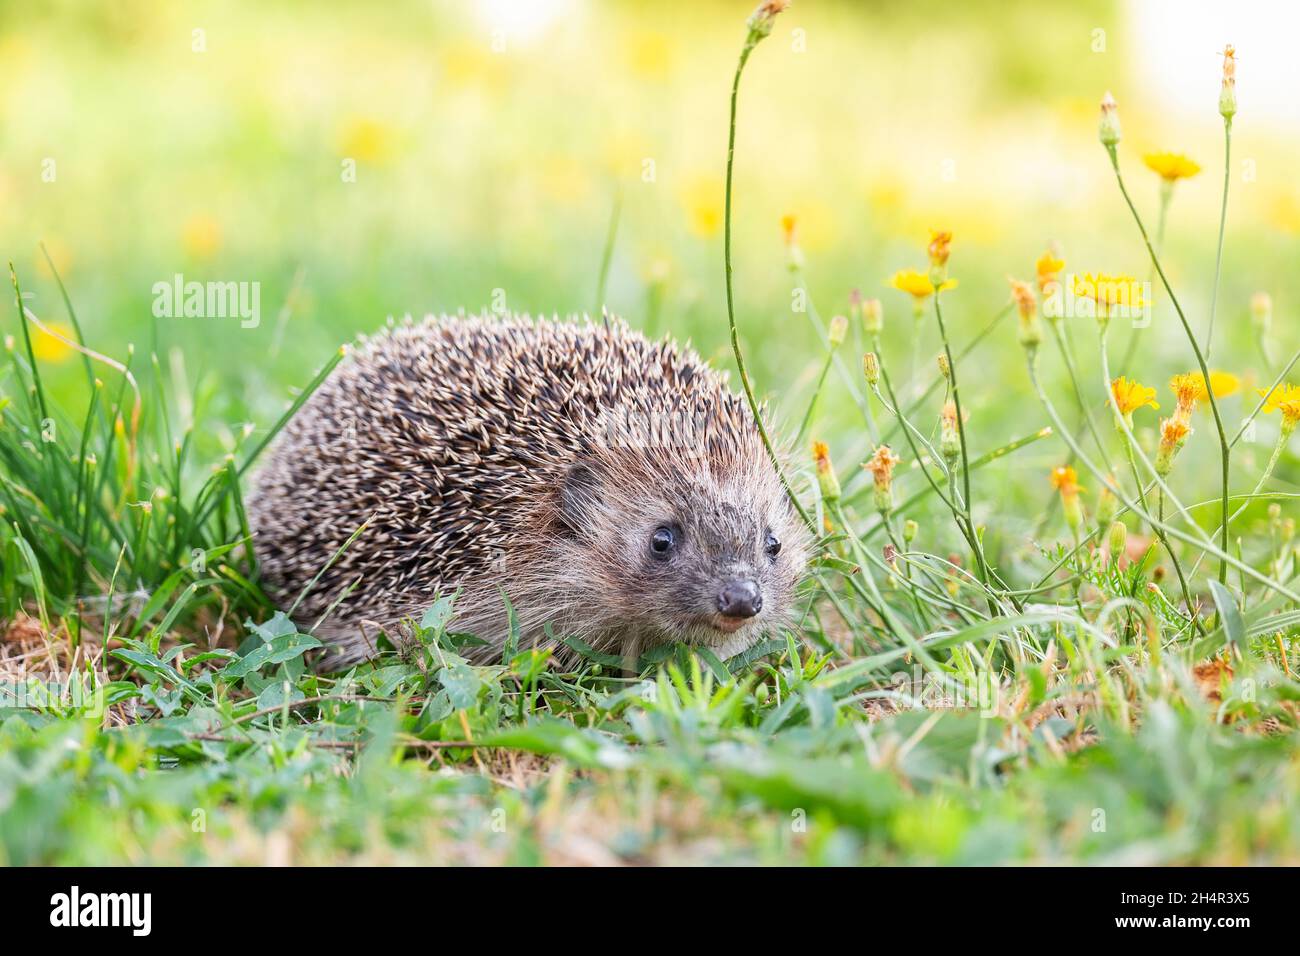 Hedgehog (Scientific name: Erinaceus Europaeus) close up of a wild, native, European hedgehog, facing right in natural garden habitat on green grass l Stock Photo